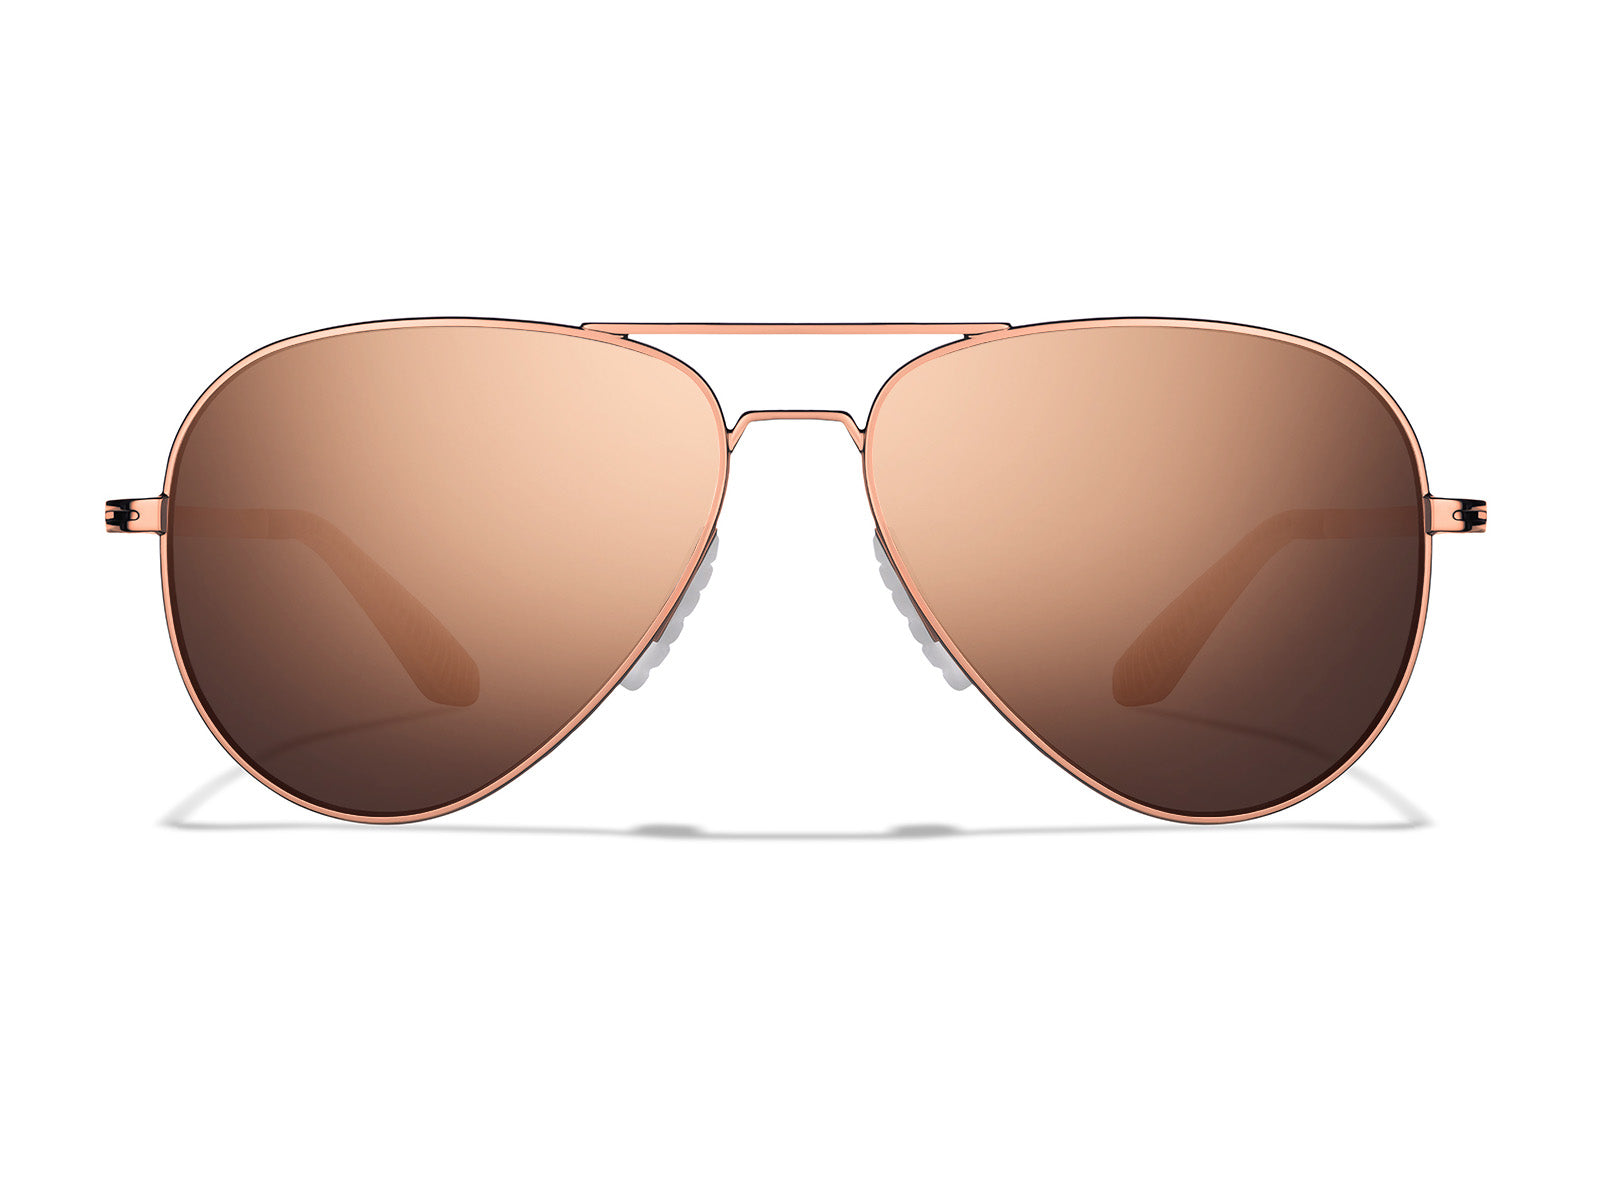 Roka Falcon Titanium Polarized Sunglasses Matte Black/Carbon, Reg 55